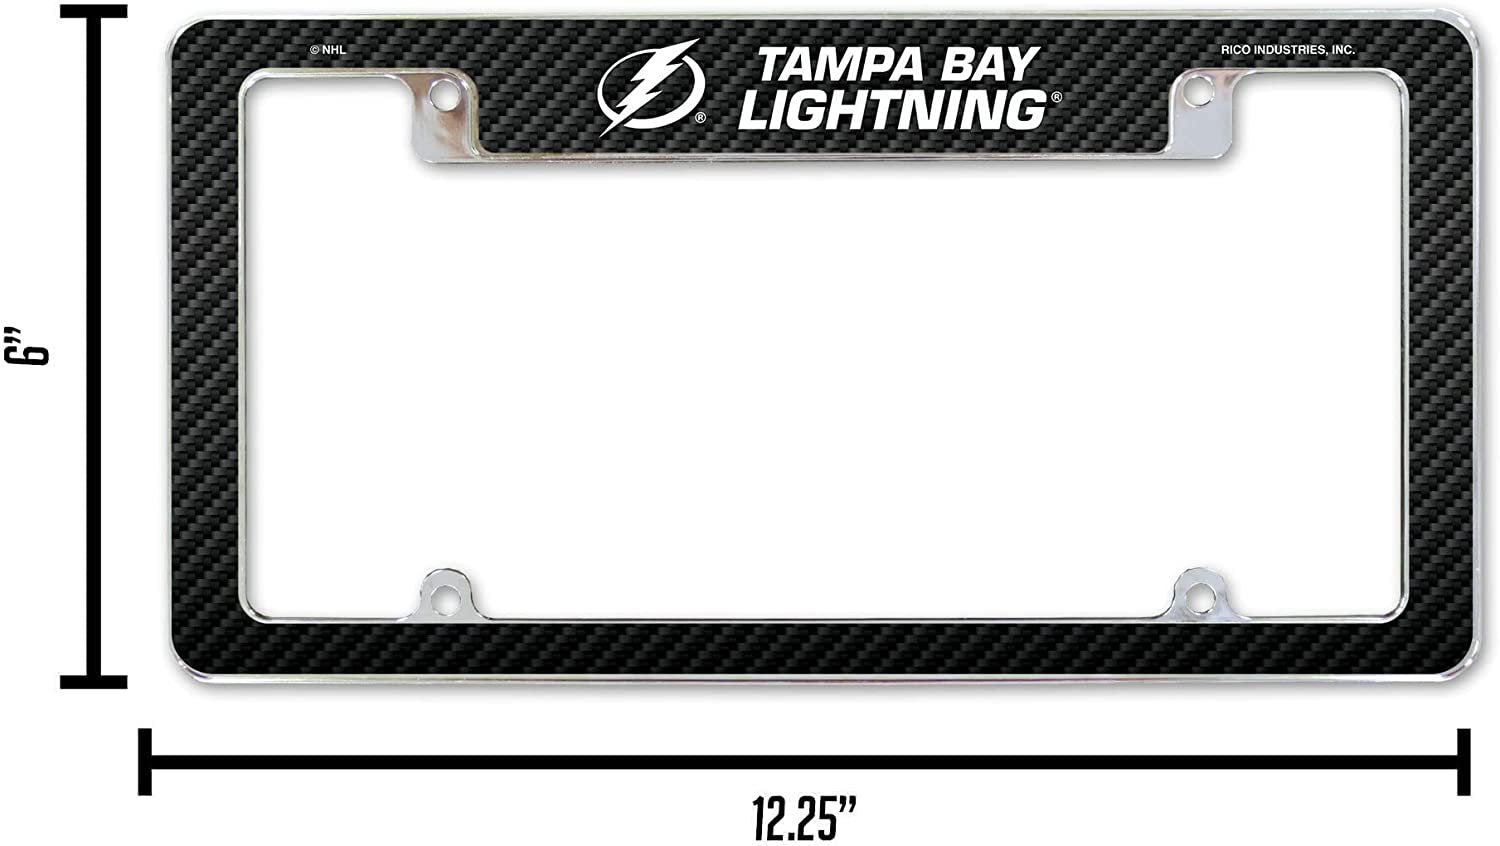 Tampa Bay Lightning Metal License Plate Frame Chrome Tag Cover Carbon Fiber Design 6x12 Inch